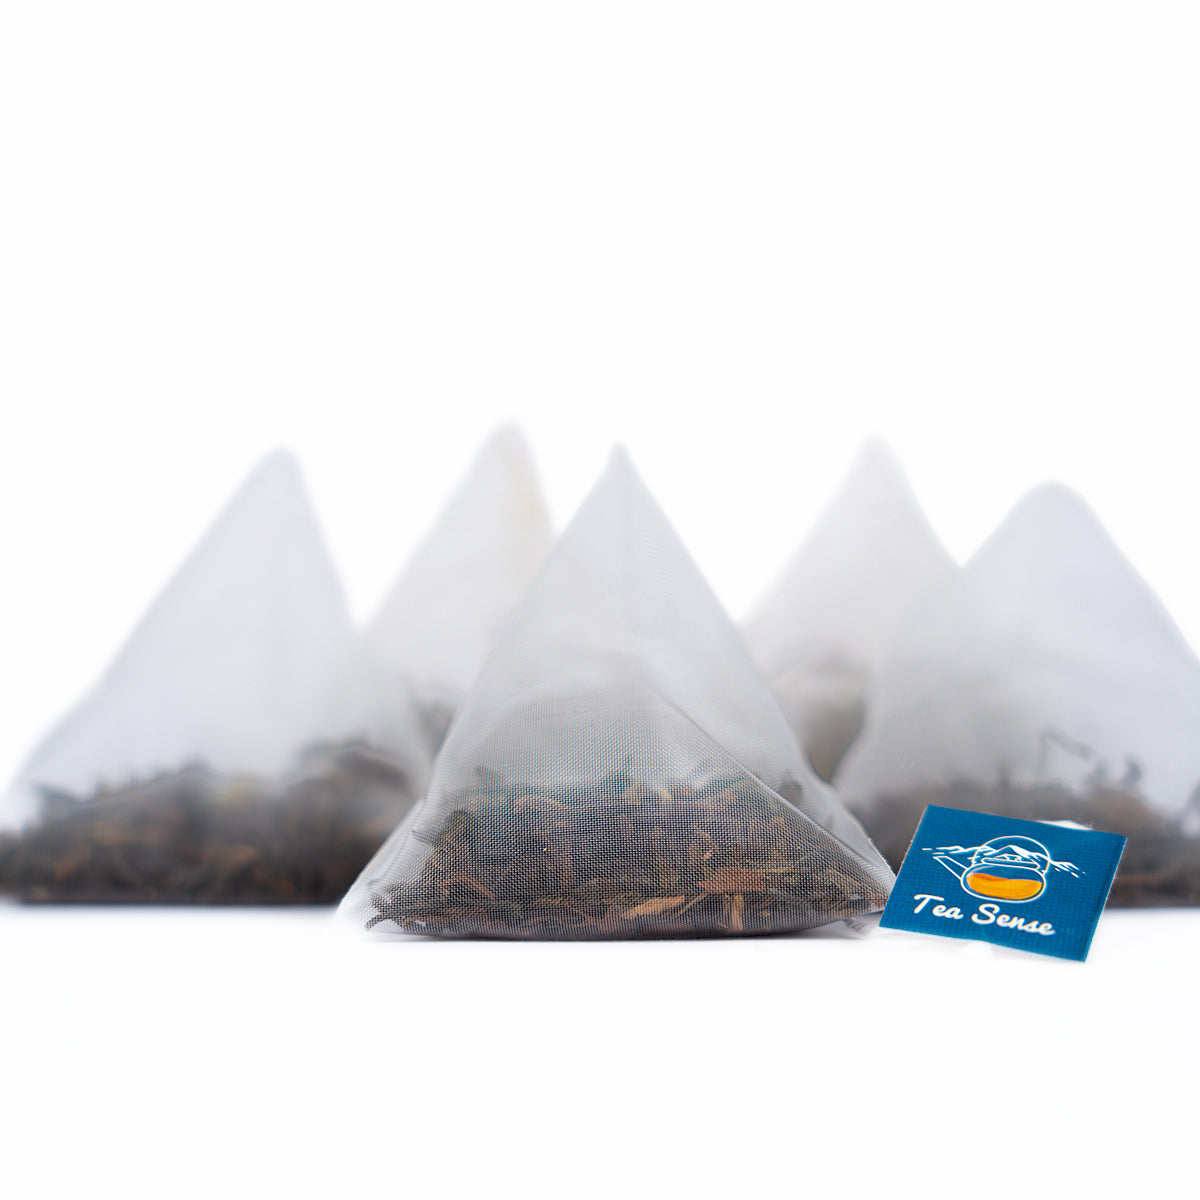 Tea Sense Darjeeling Black Tea Bags Box - buy in USA, Australia, Canada